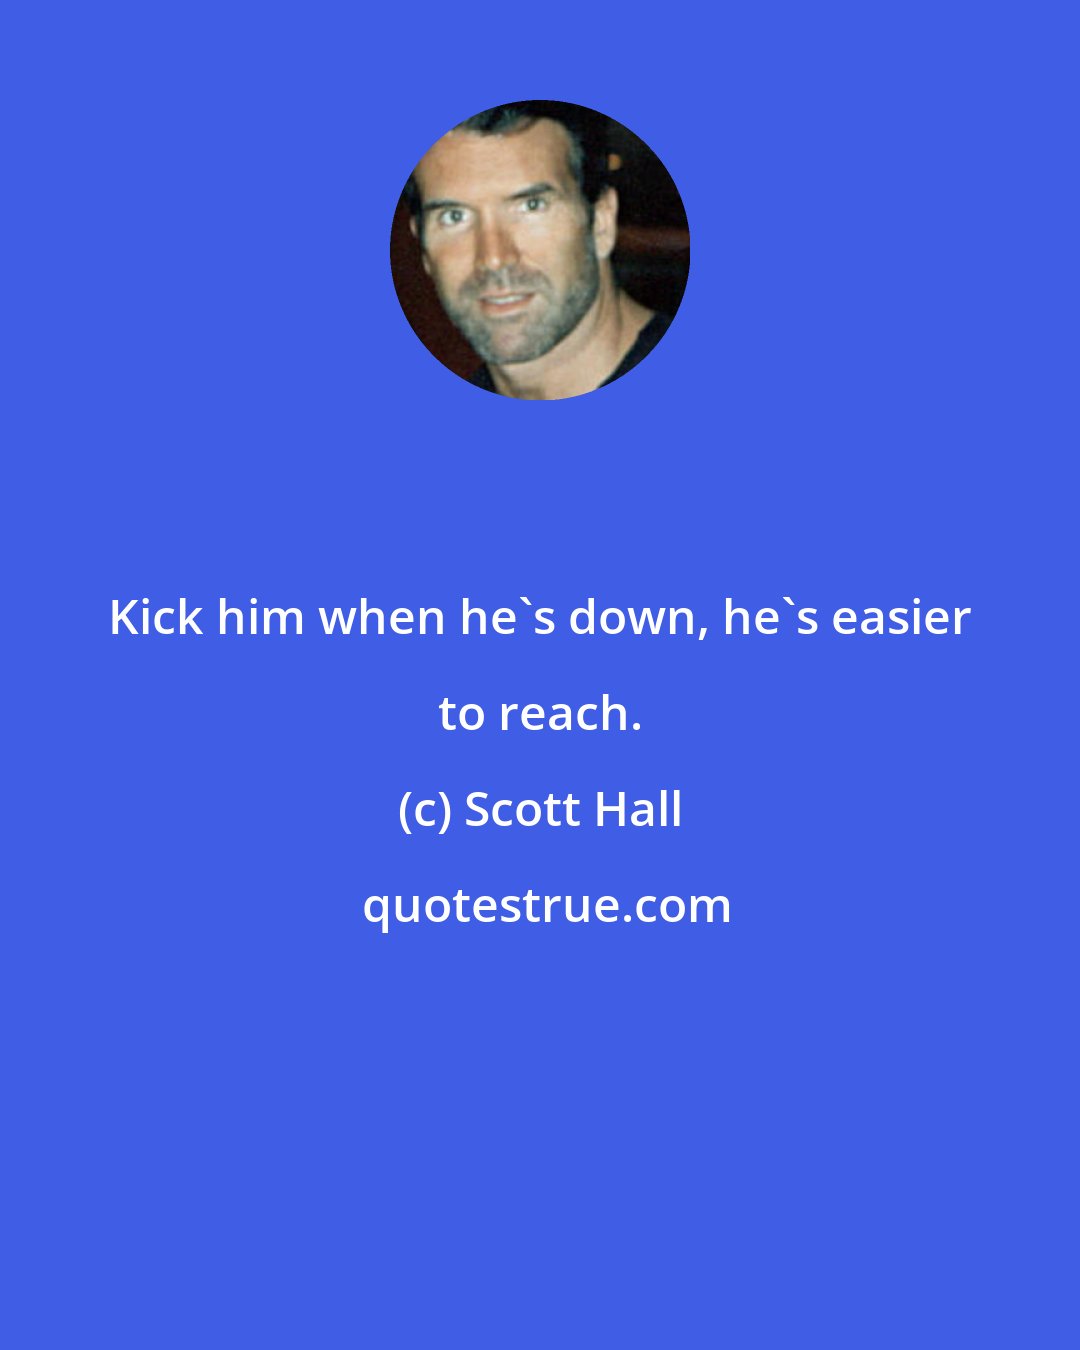 Scott Hall: Kick him when he's down, he's easier to reach.